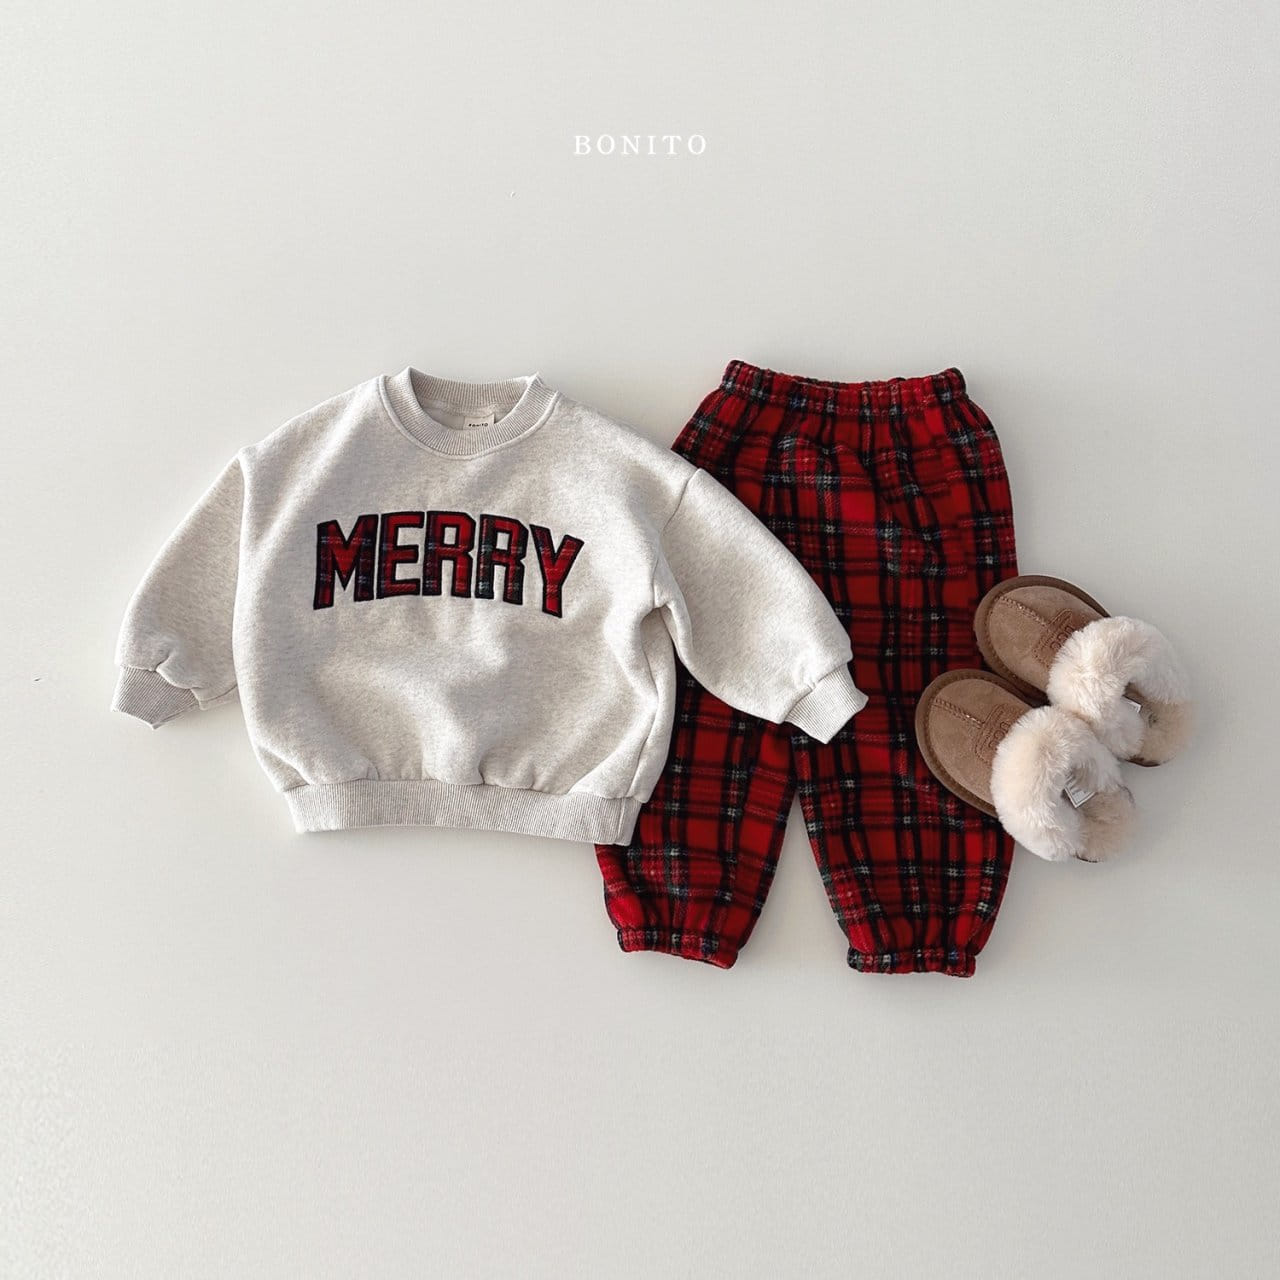 Bonito - Korean Baby Fashion - #babyoutfit - Merry Top Bottom Set - 9